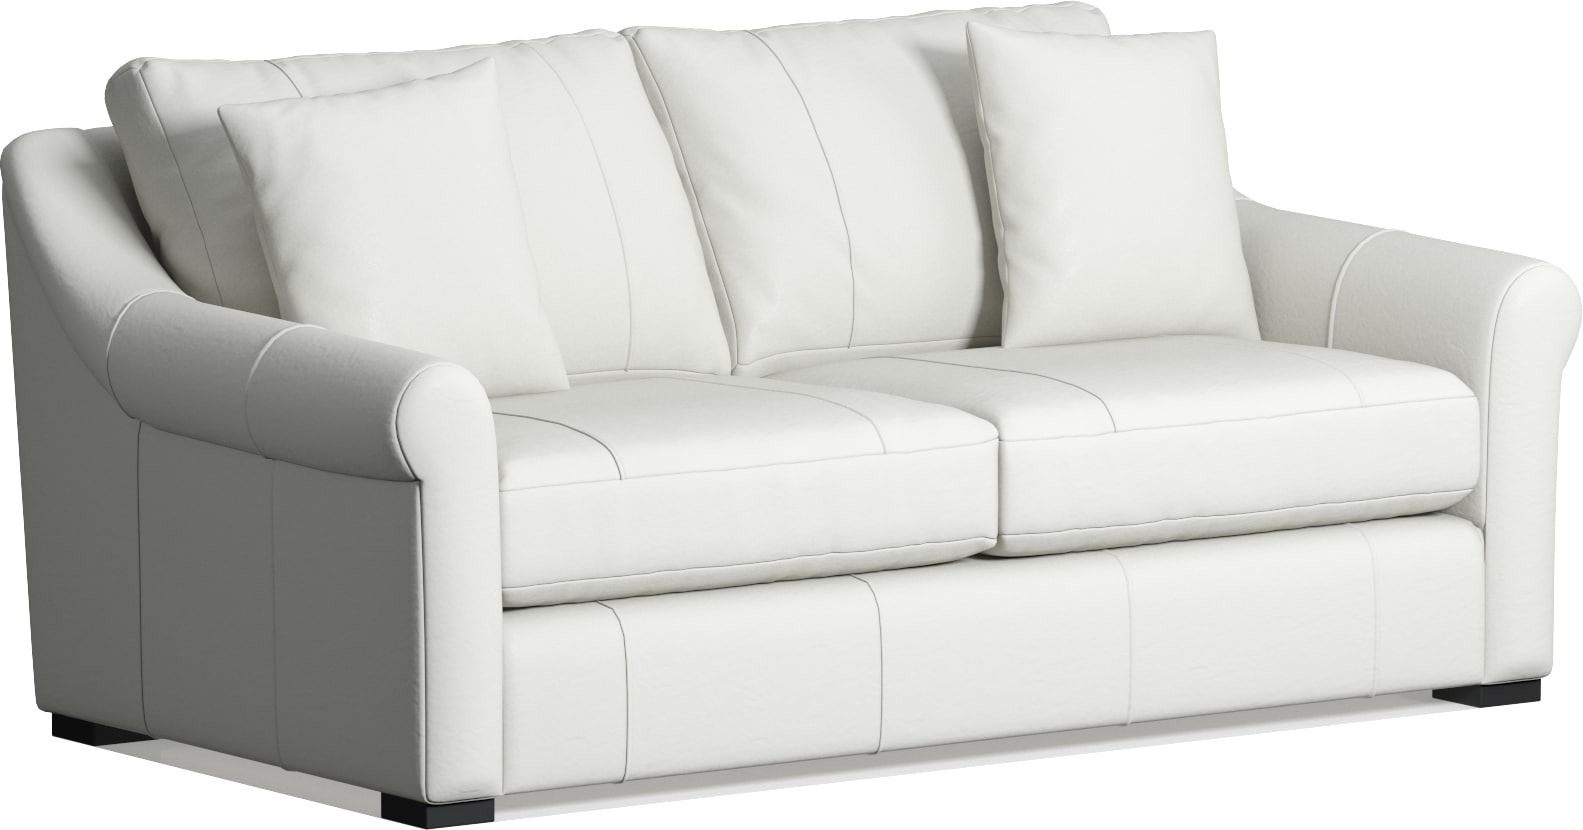 Bowery Leather Sofa Value City Furniture